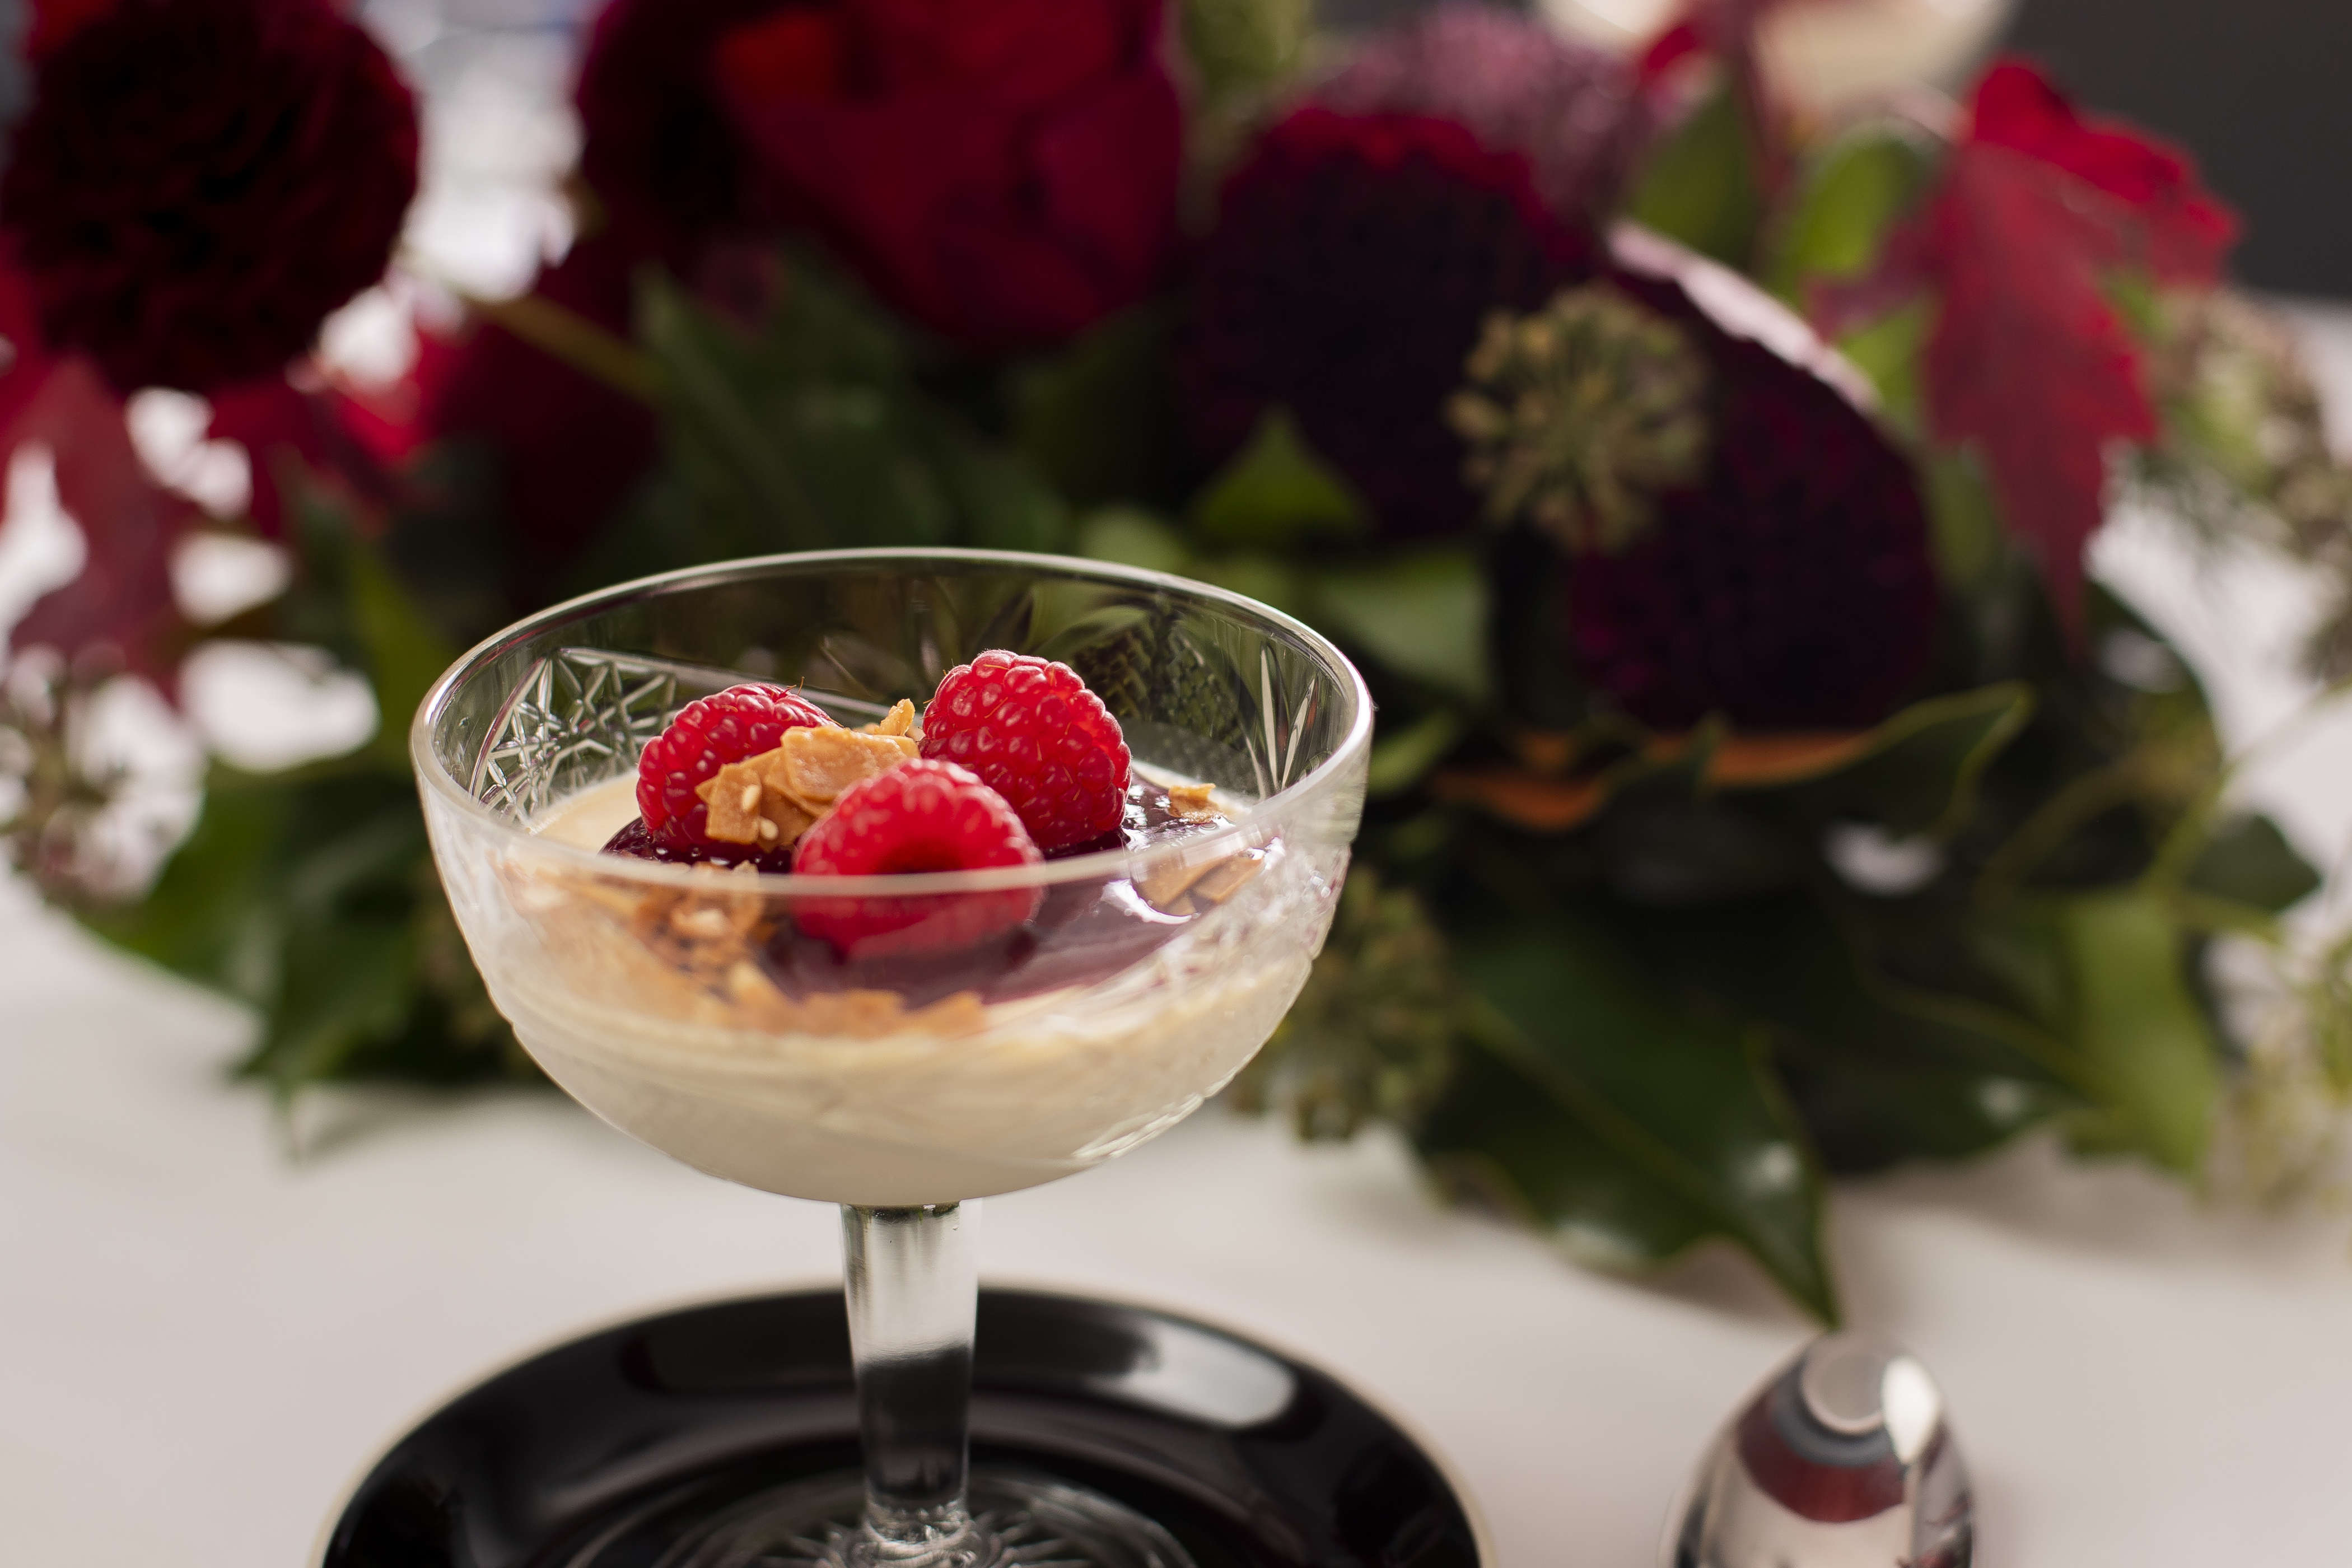 Vanilla panna cotta with raspberry coulis and fresh raspberries. Photo: Richard Jupe.